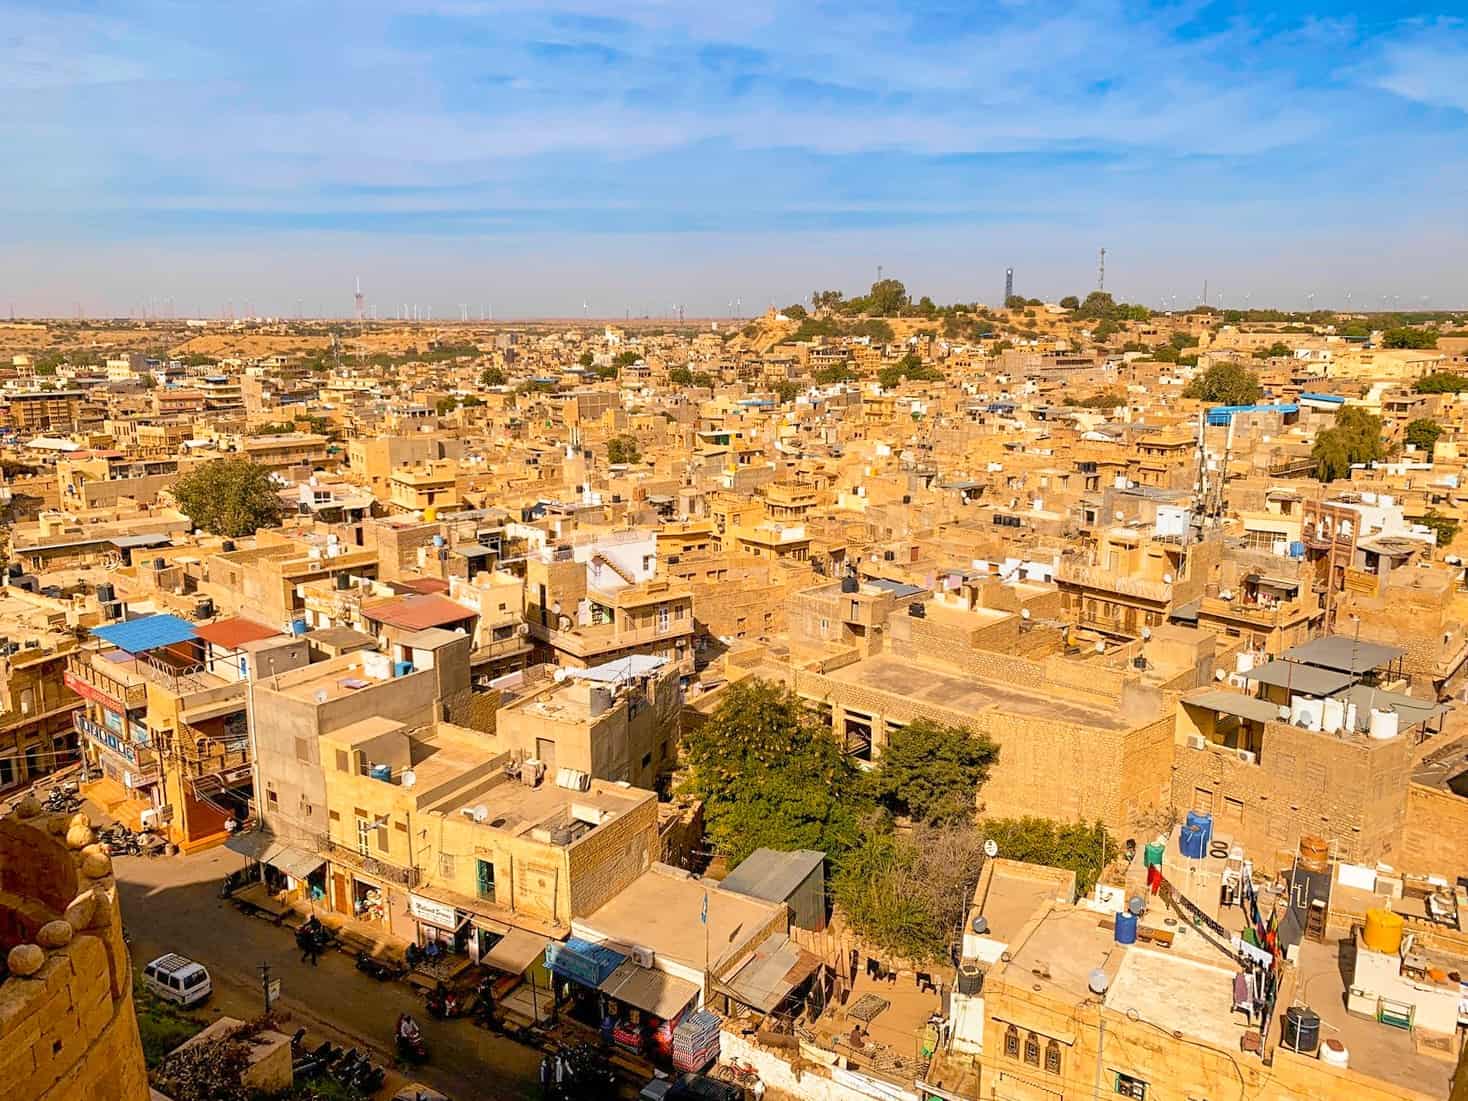 The golden city of Jaisalmer